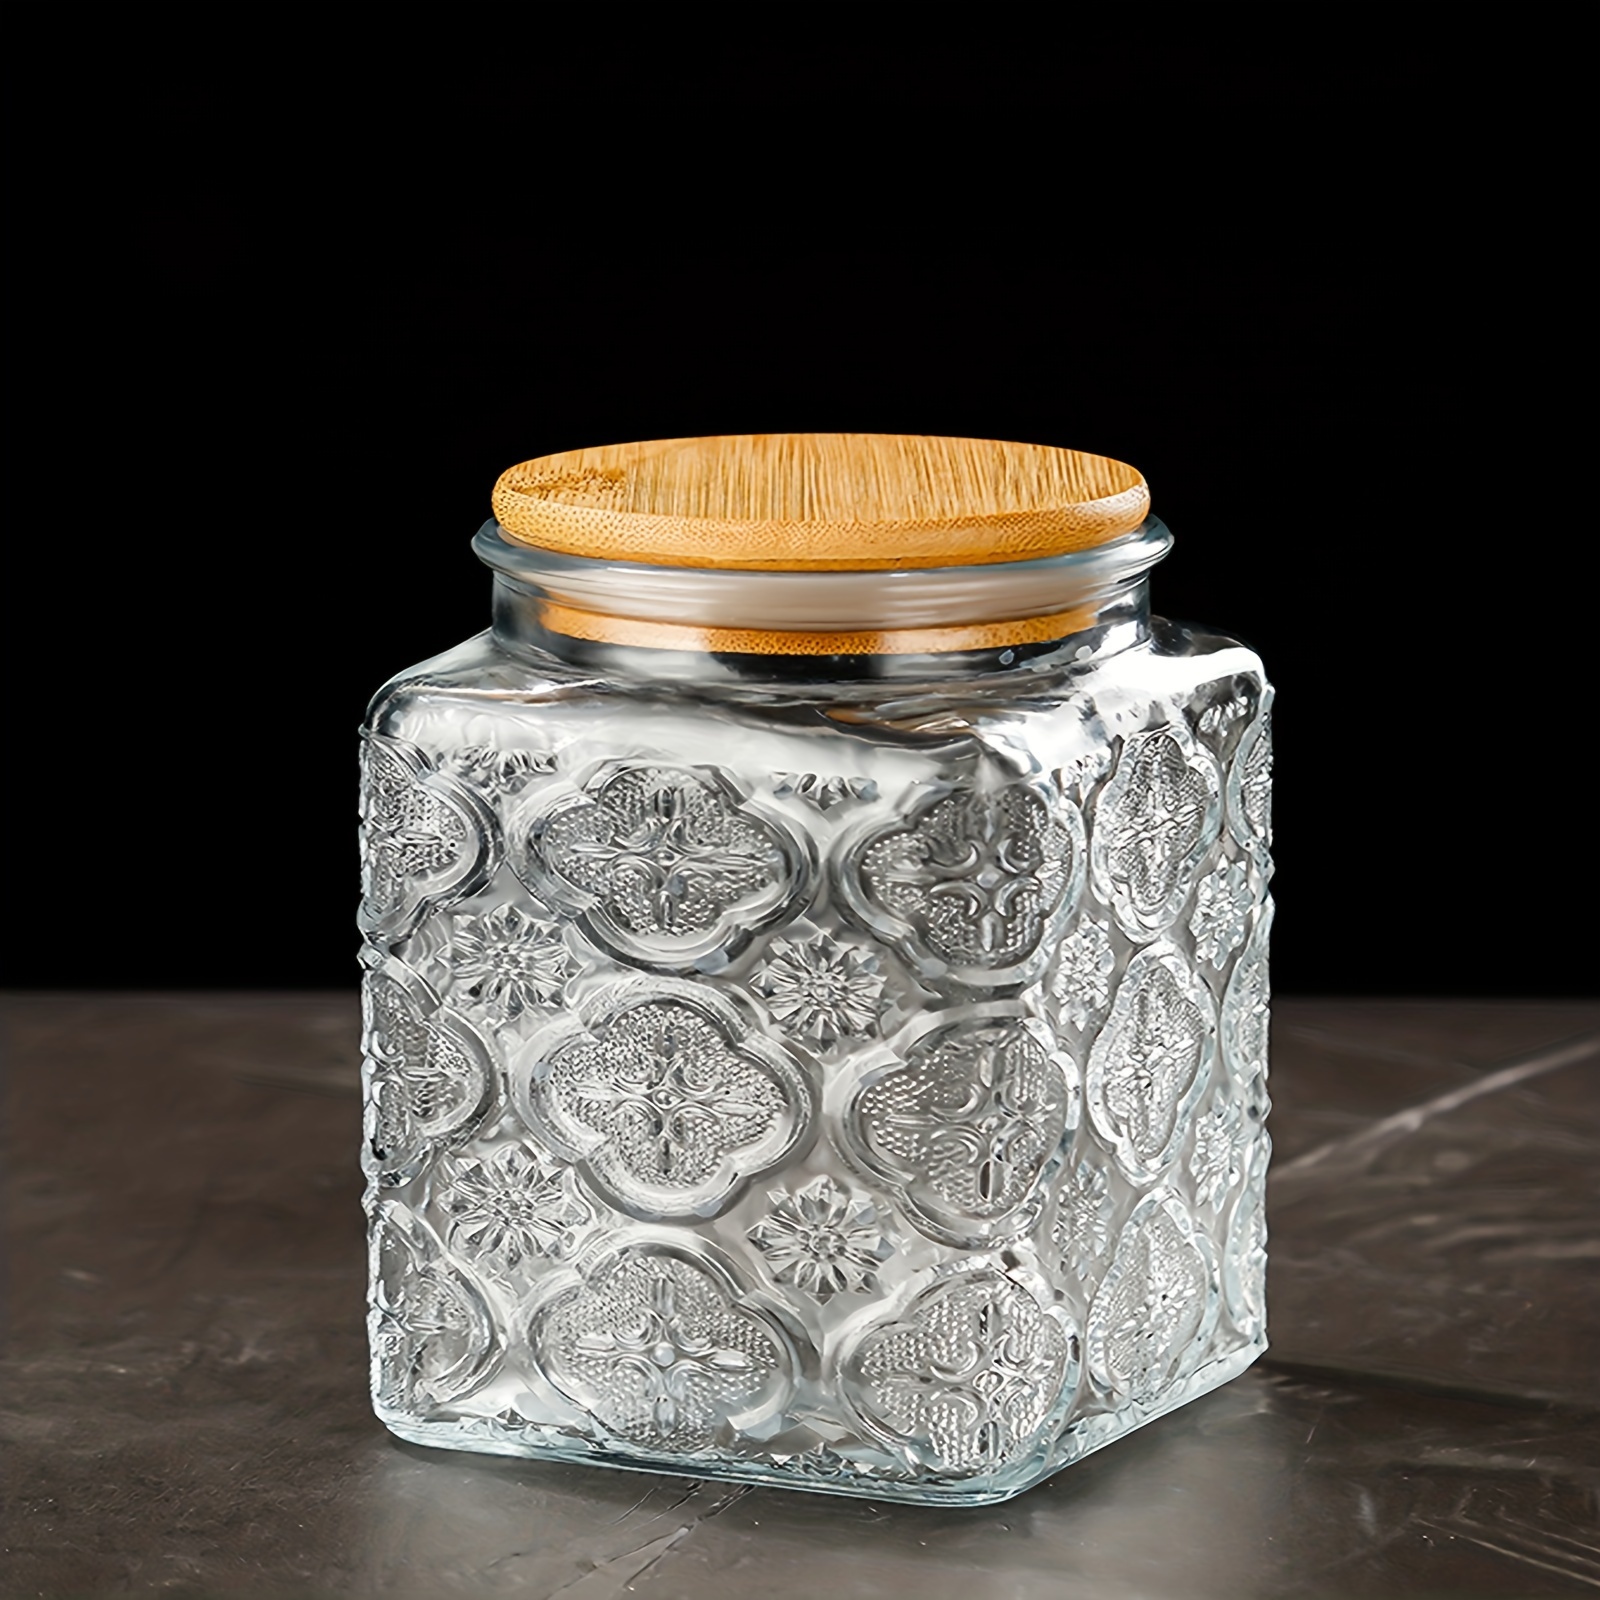 Vintage Square Embossed Glass Jar Acacia Wood Lid Sealed Jar